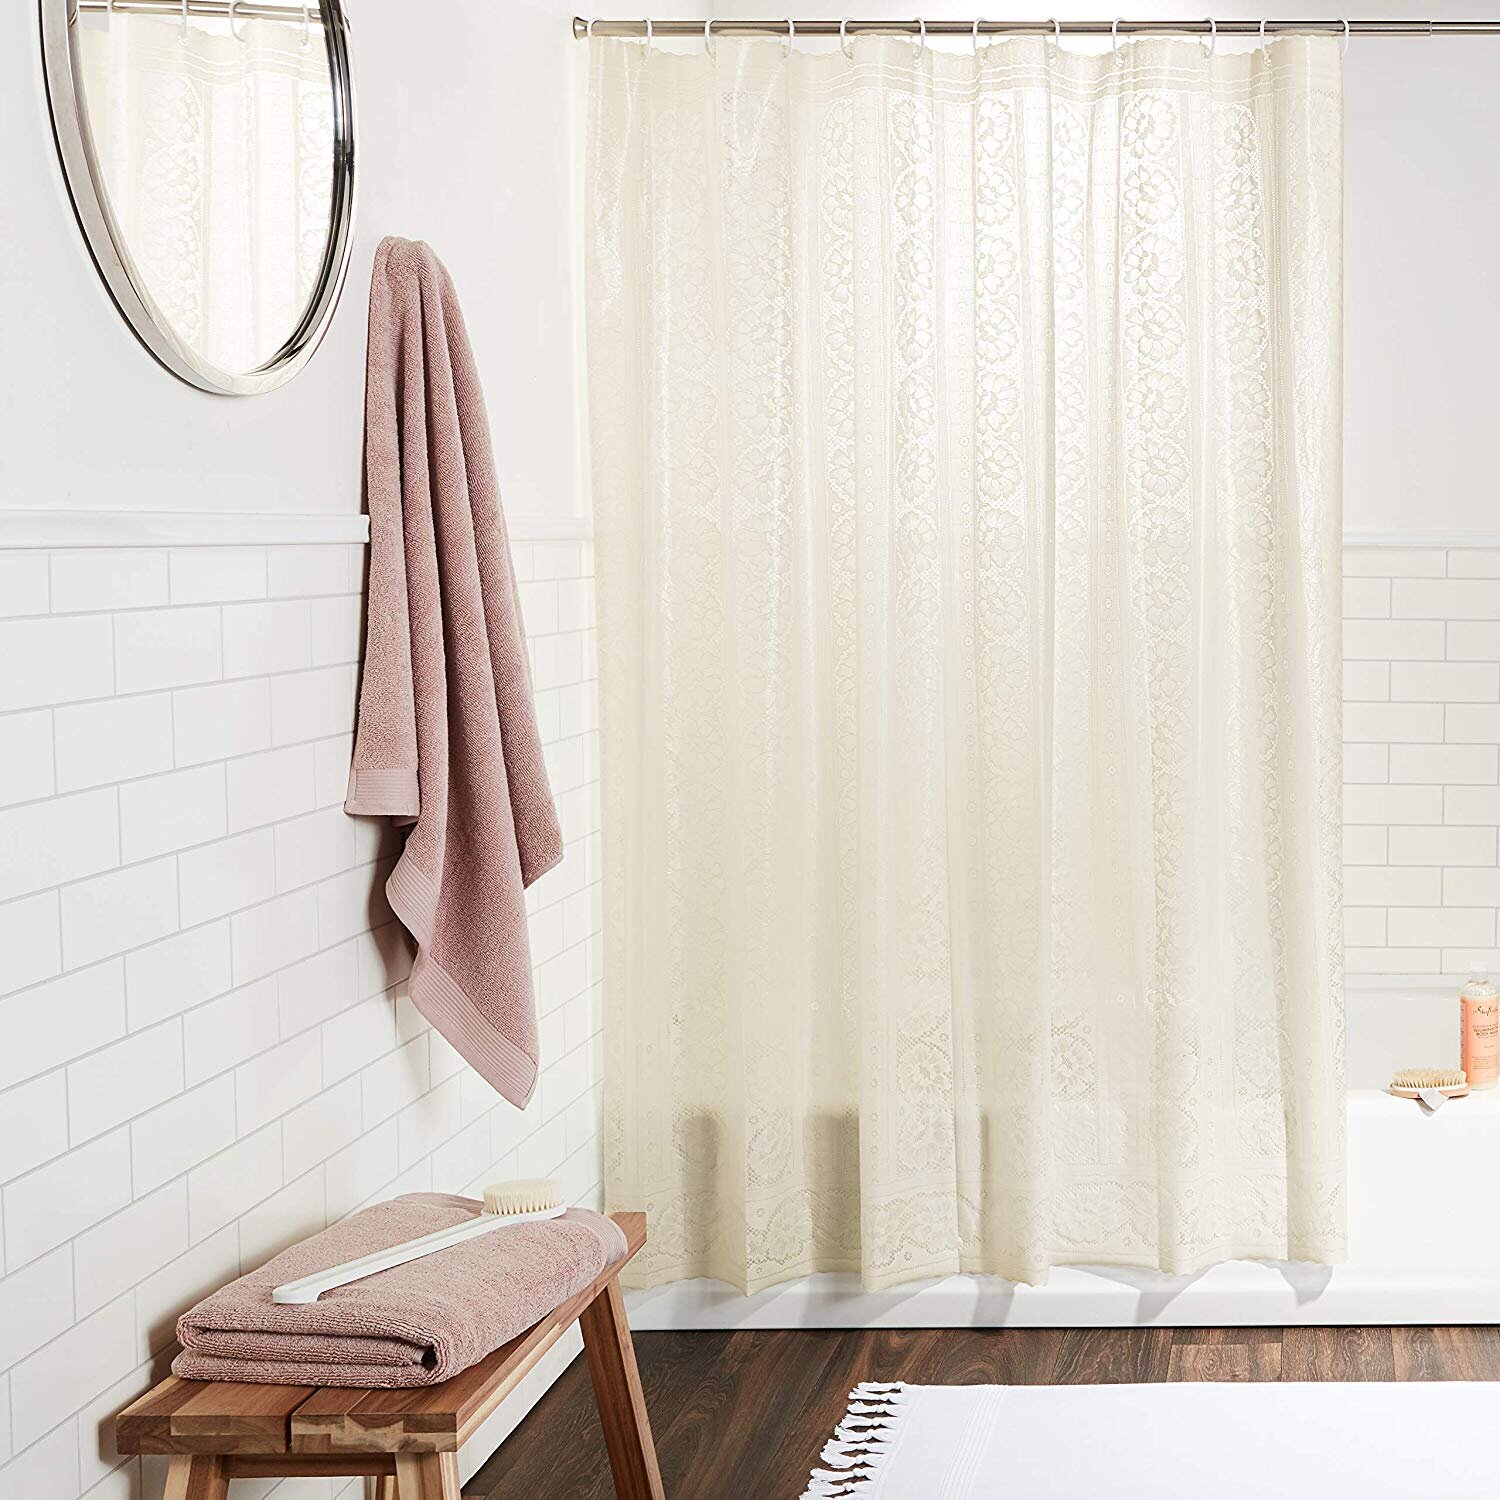 Rosalind Wheeler Aimee Vinyl Floral Shower Curtain With Hooks Included Wayfair